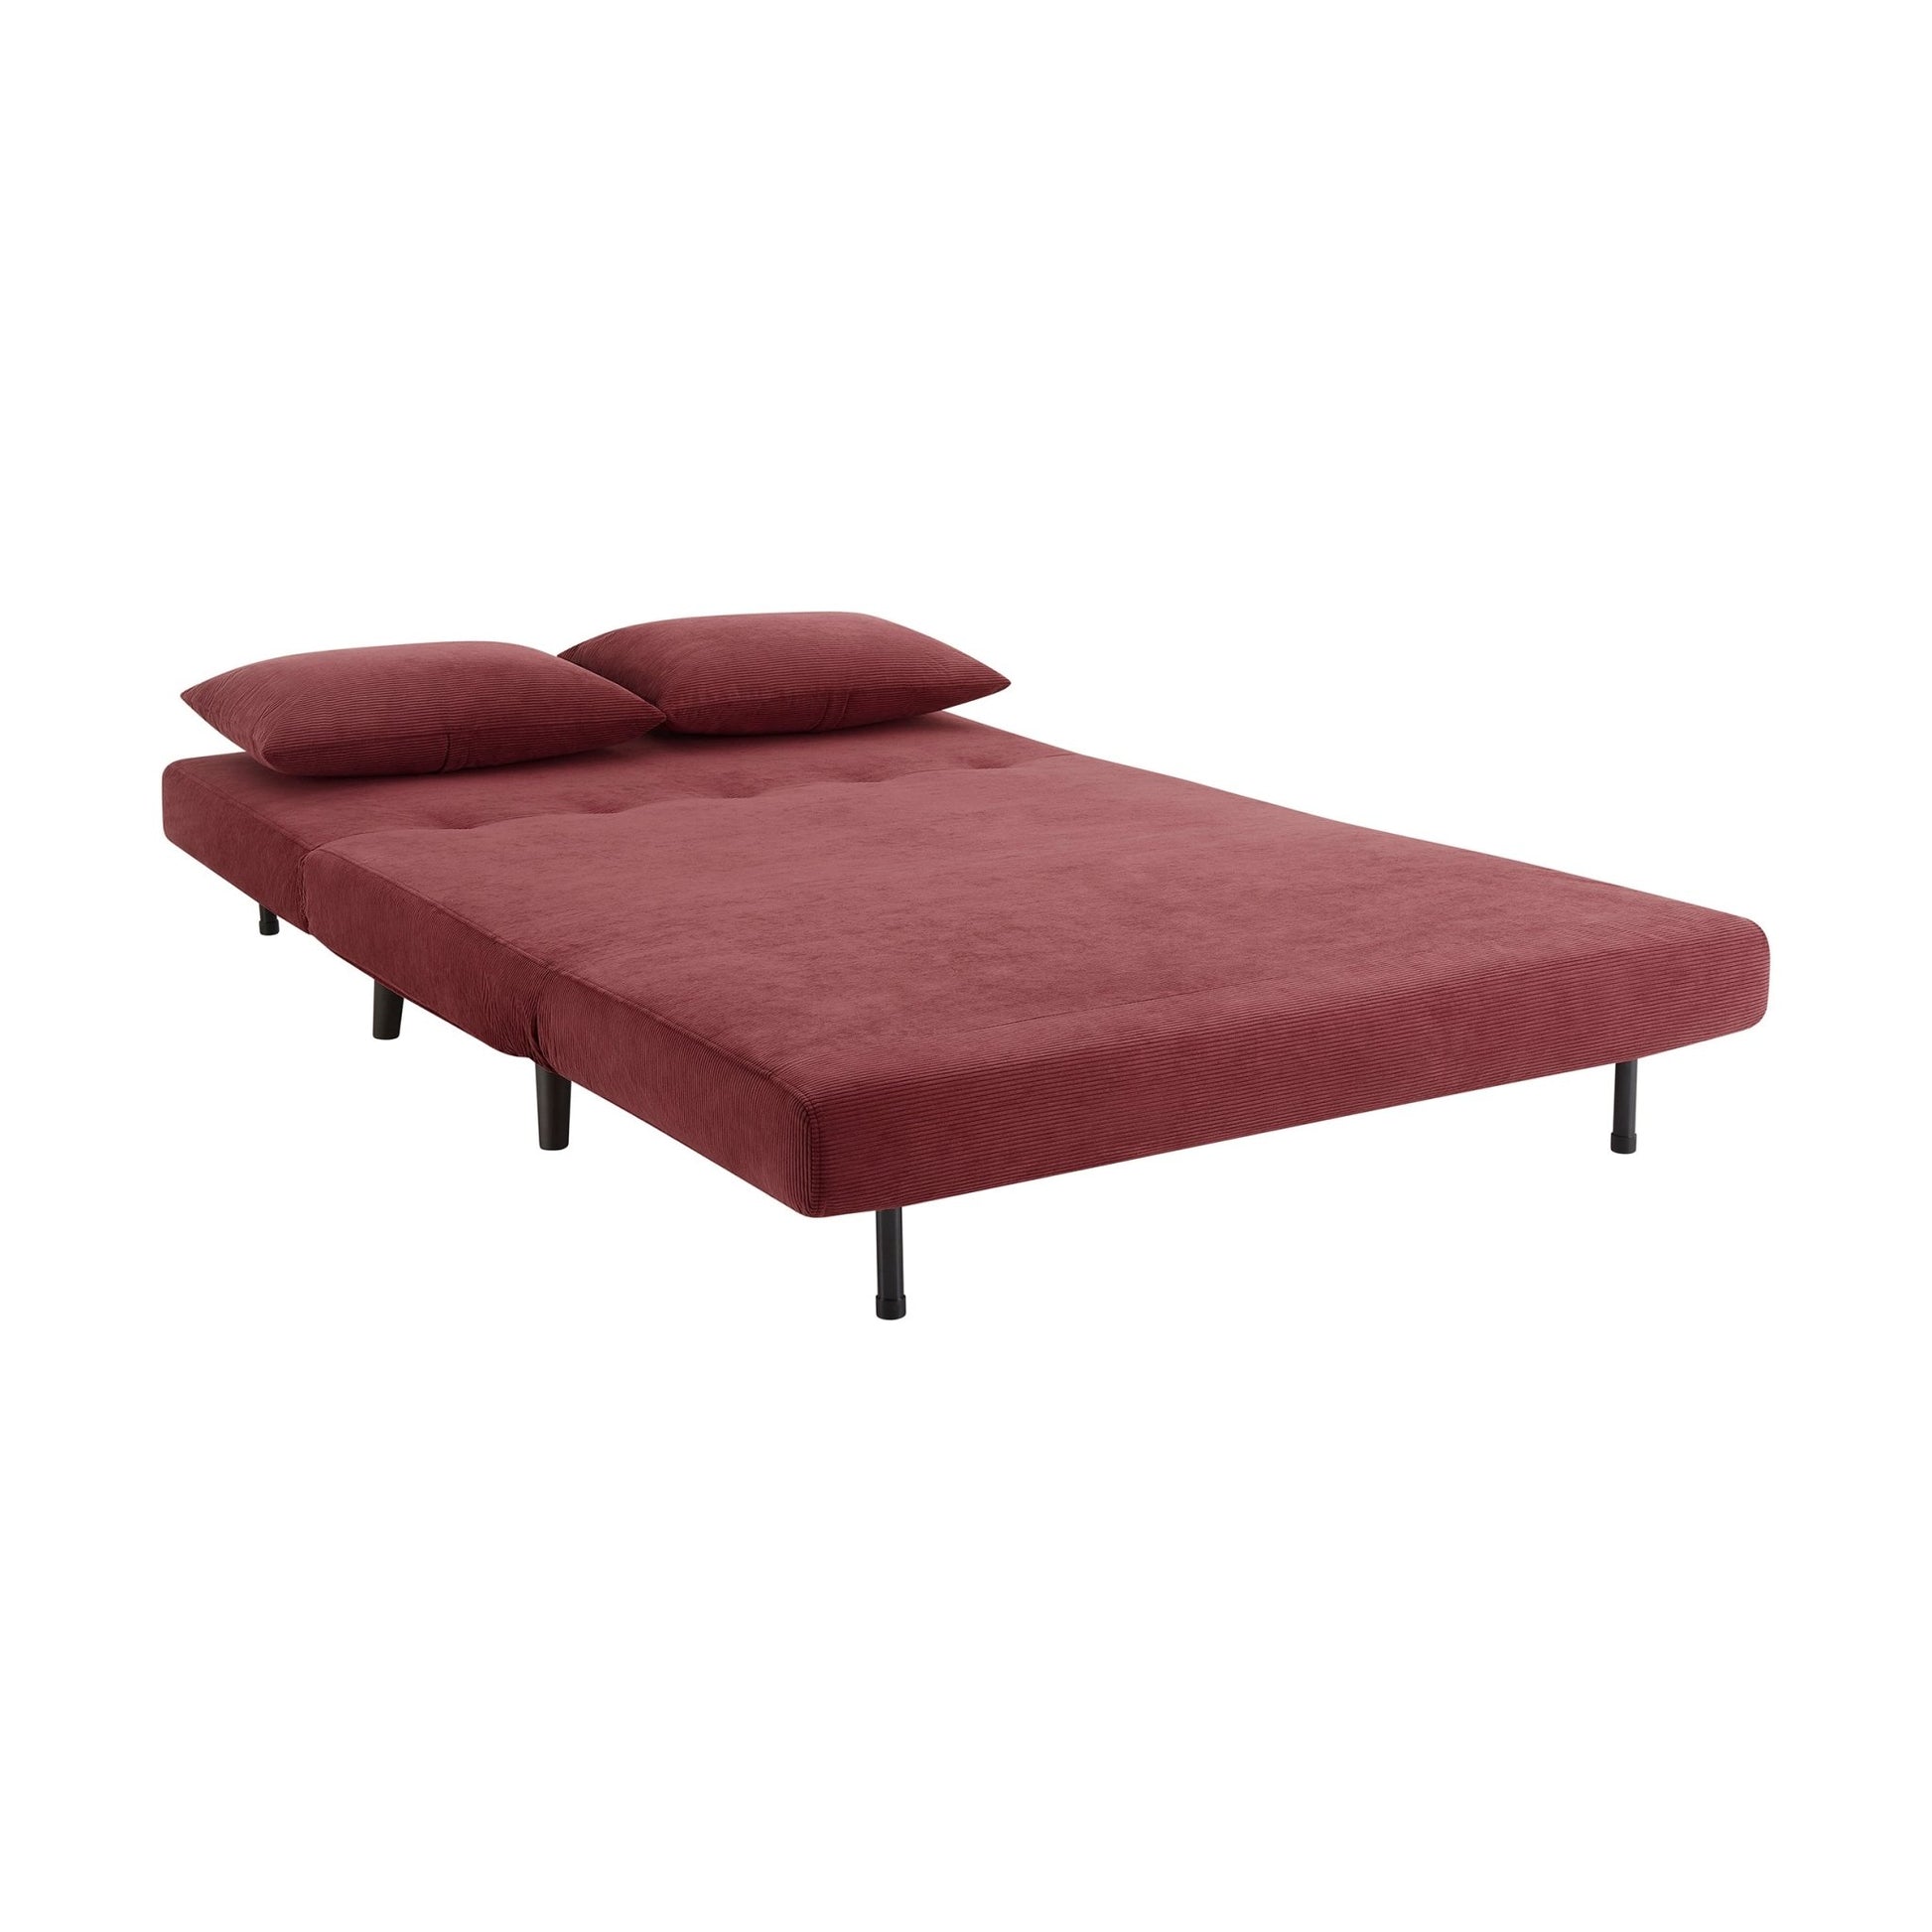 Seattle Double Click Clack Sofa Bed - Corduroy - Berry - DUSK